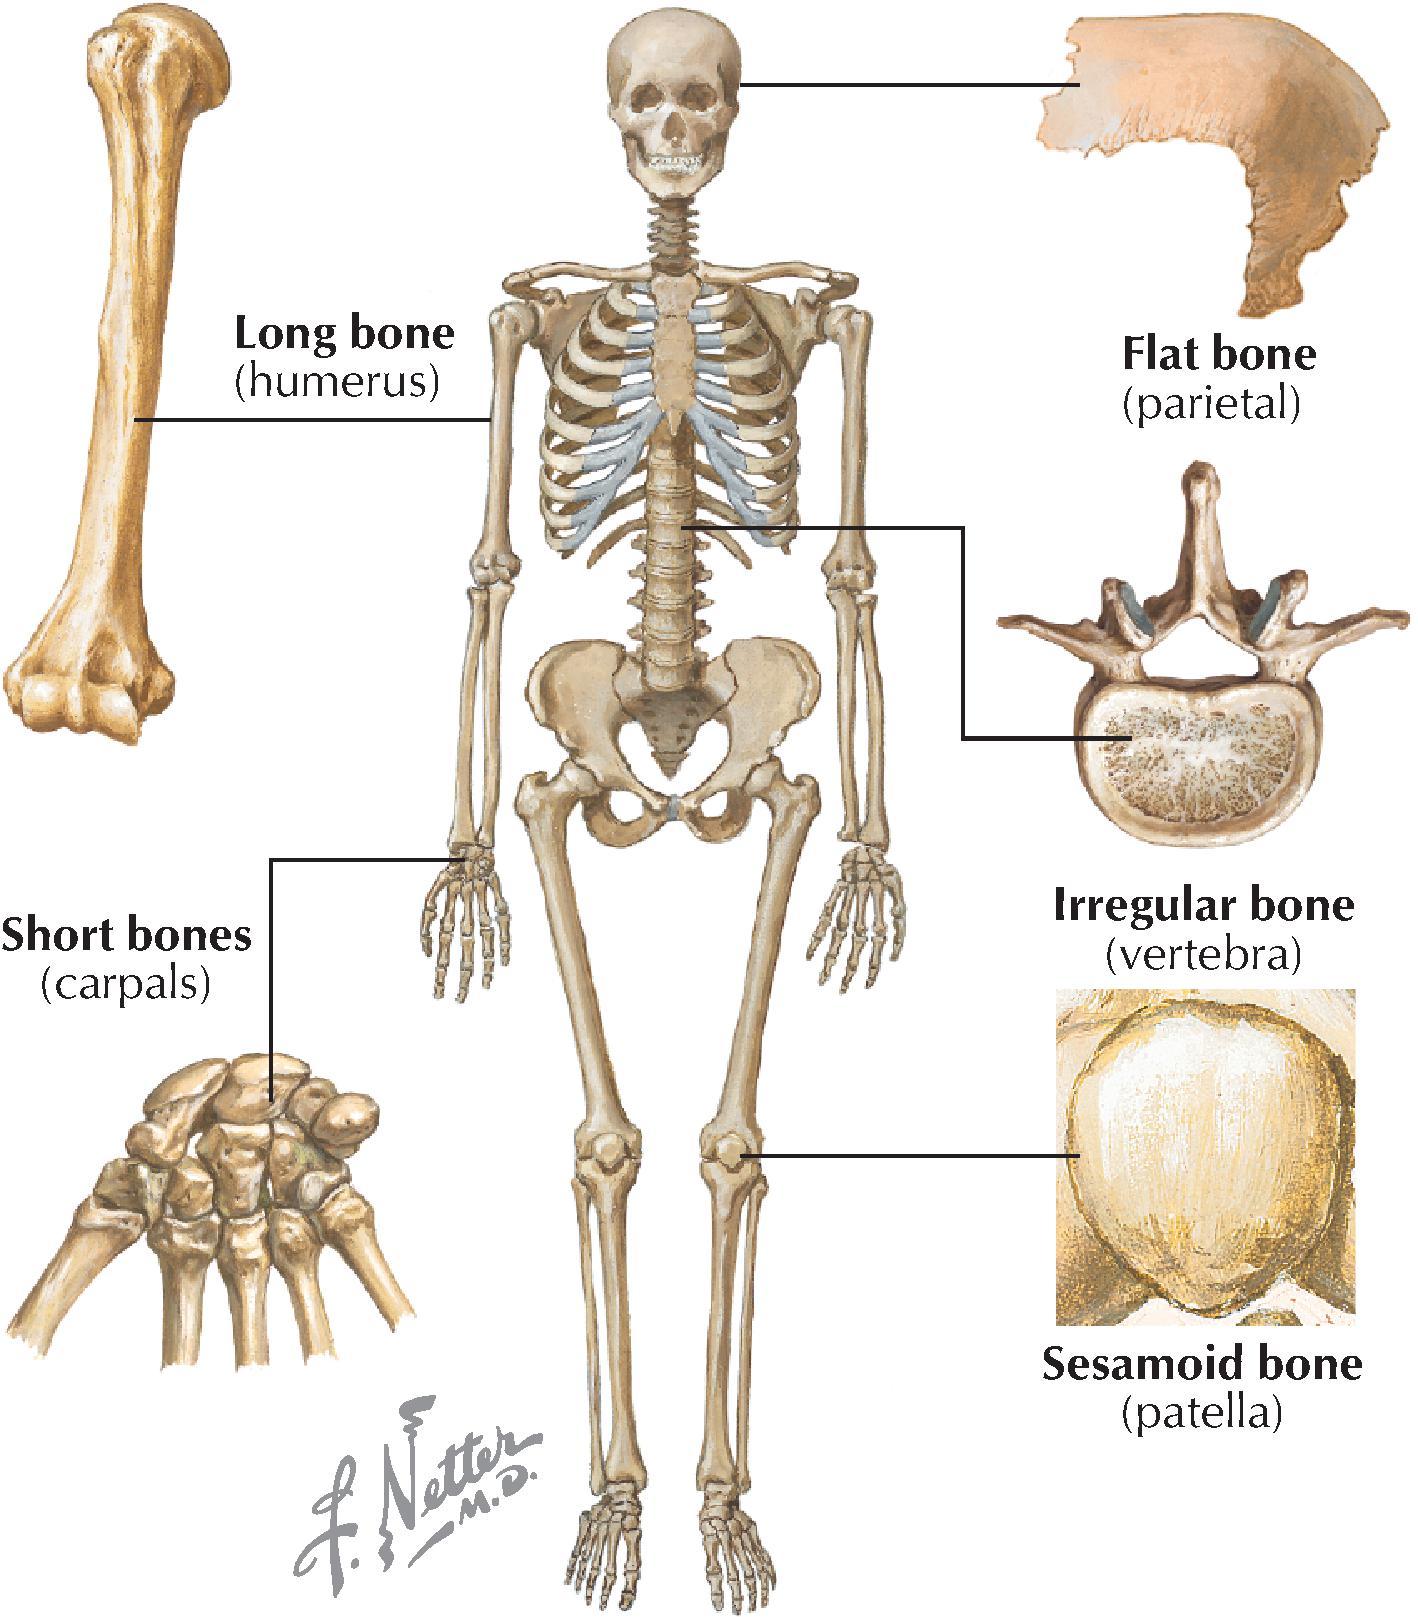 FIGURE 1.6, Bone Classification Based on Shape.